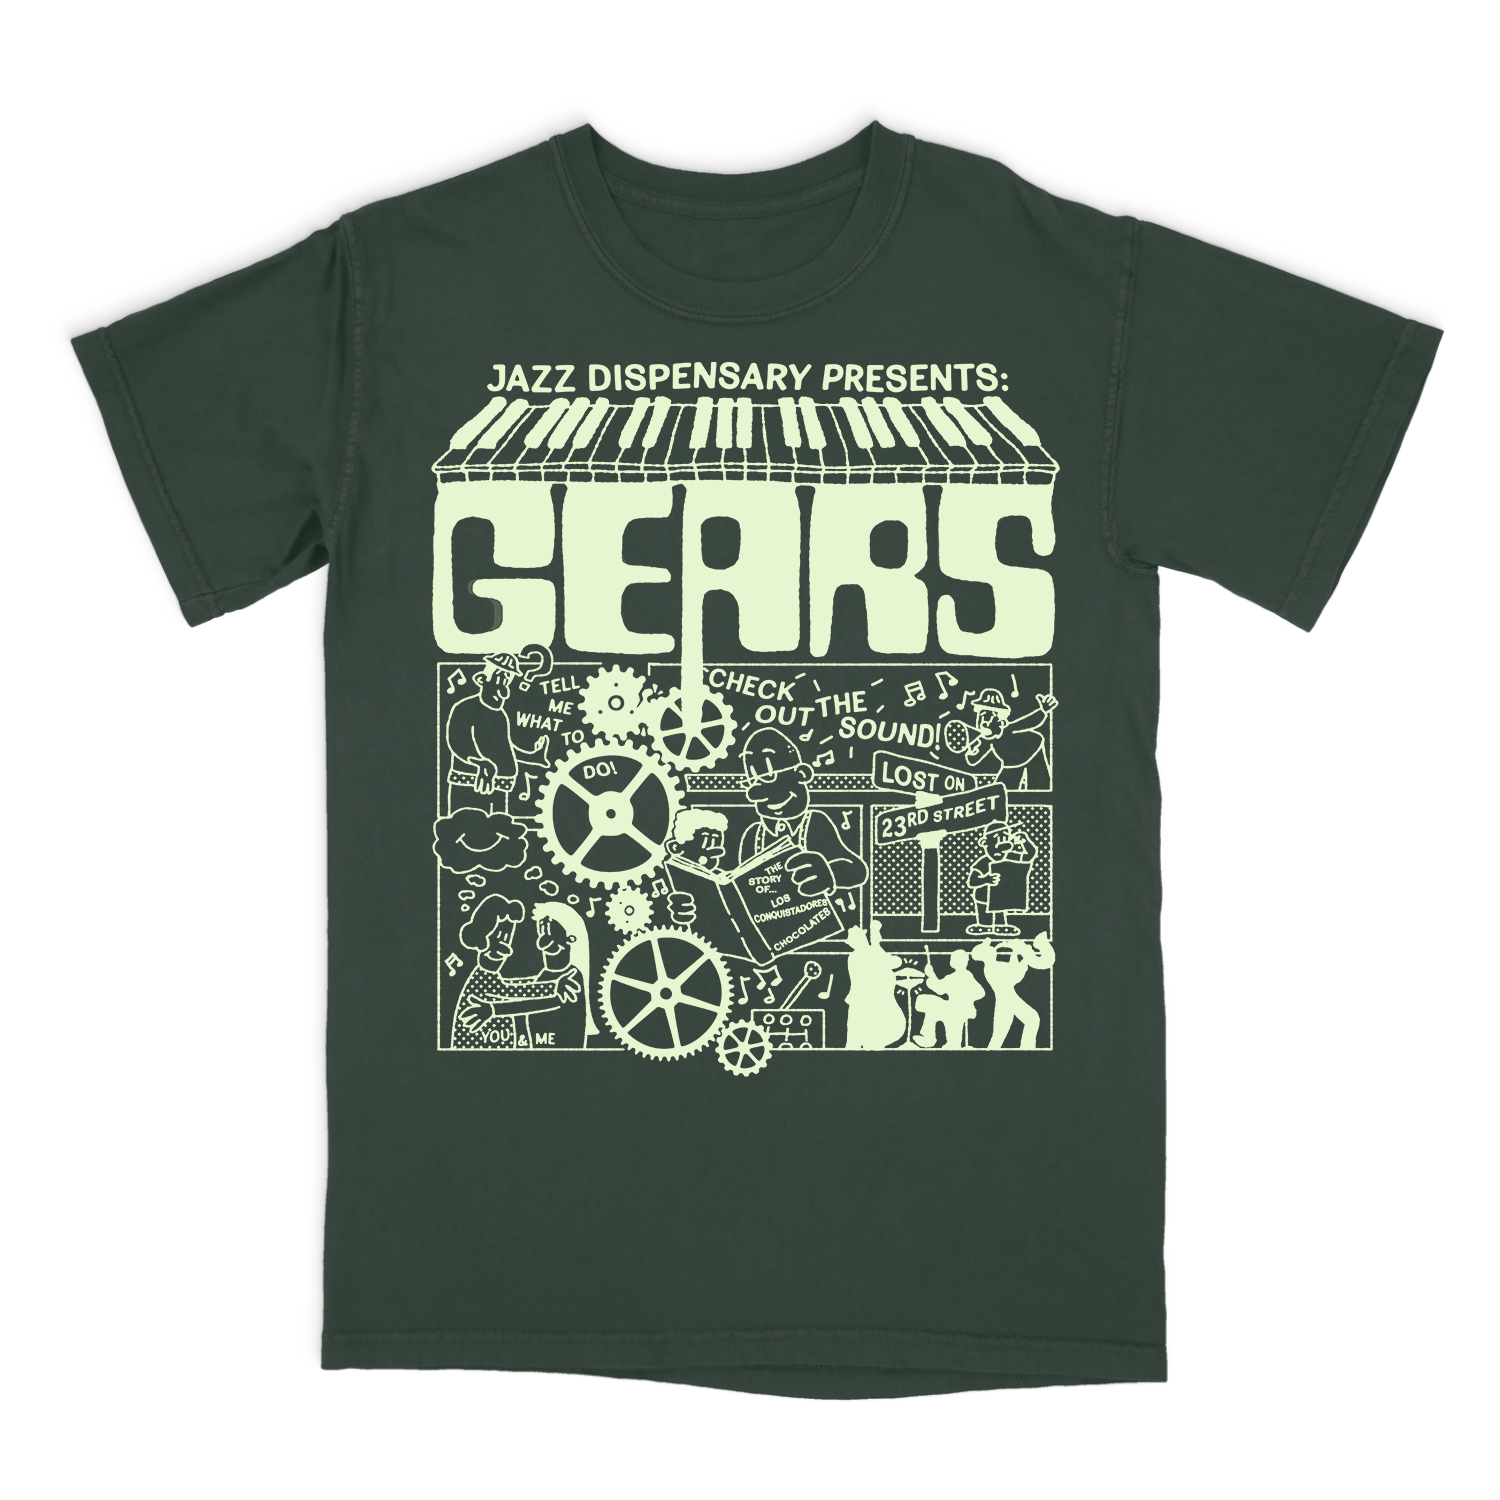 Gears Impressionistee T-Shirt